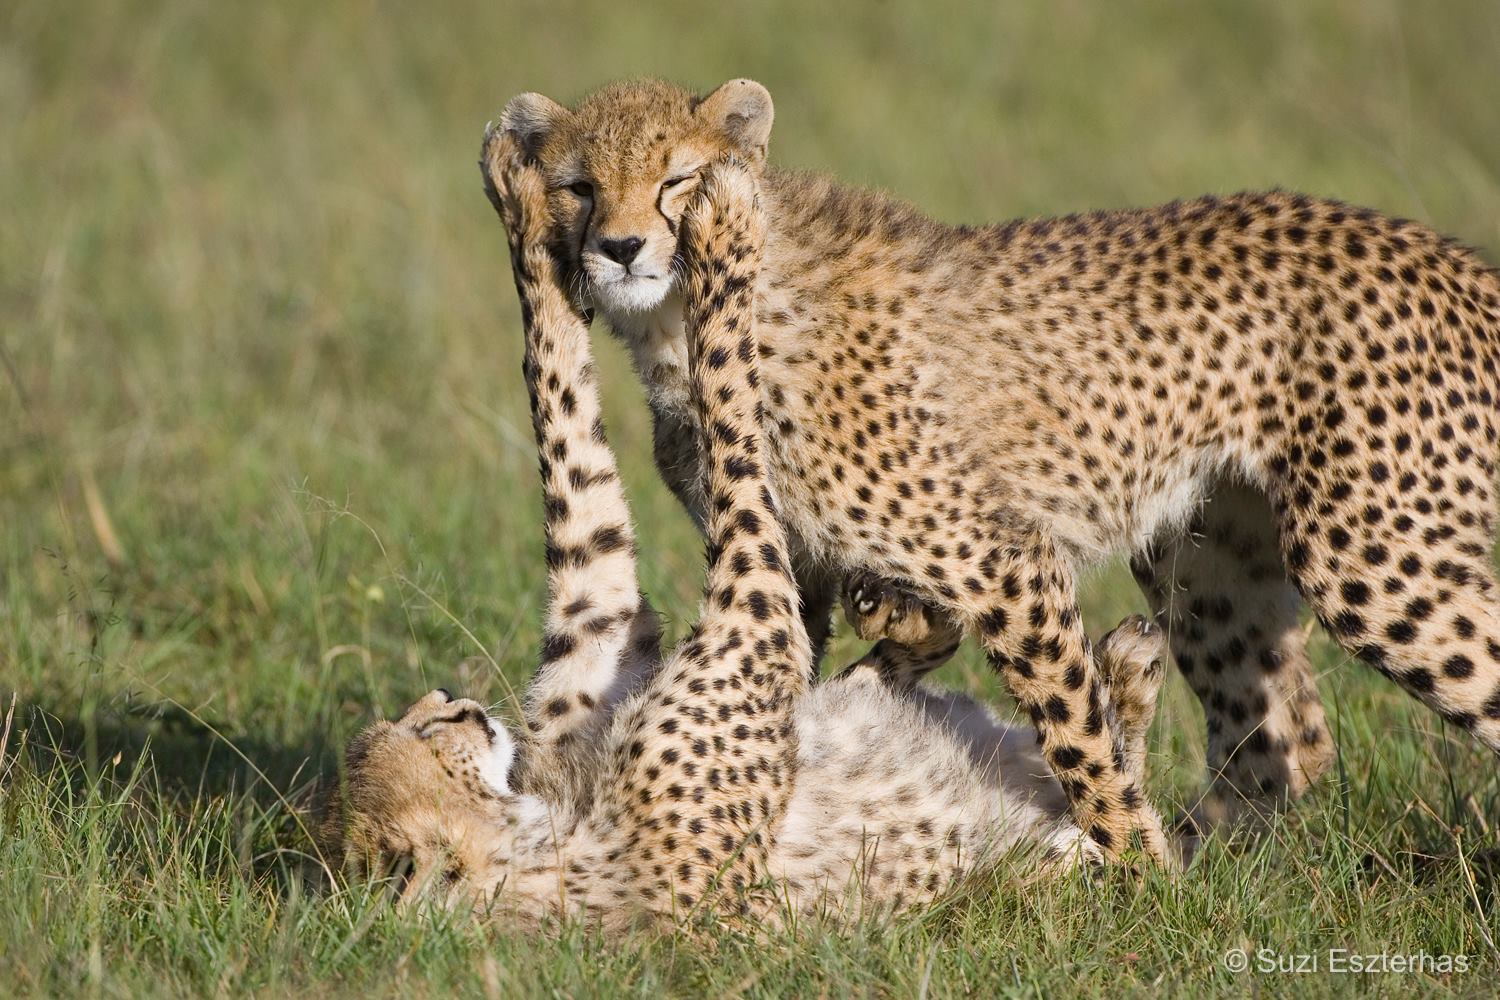 Choosing responsible wildlife encounters on safari, Cheetahs